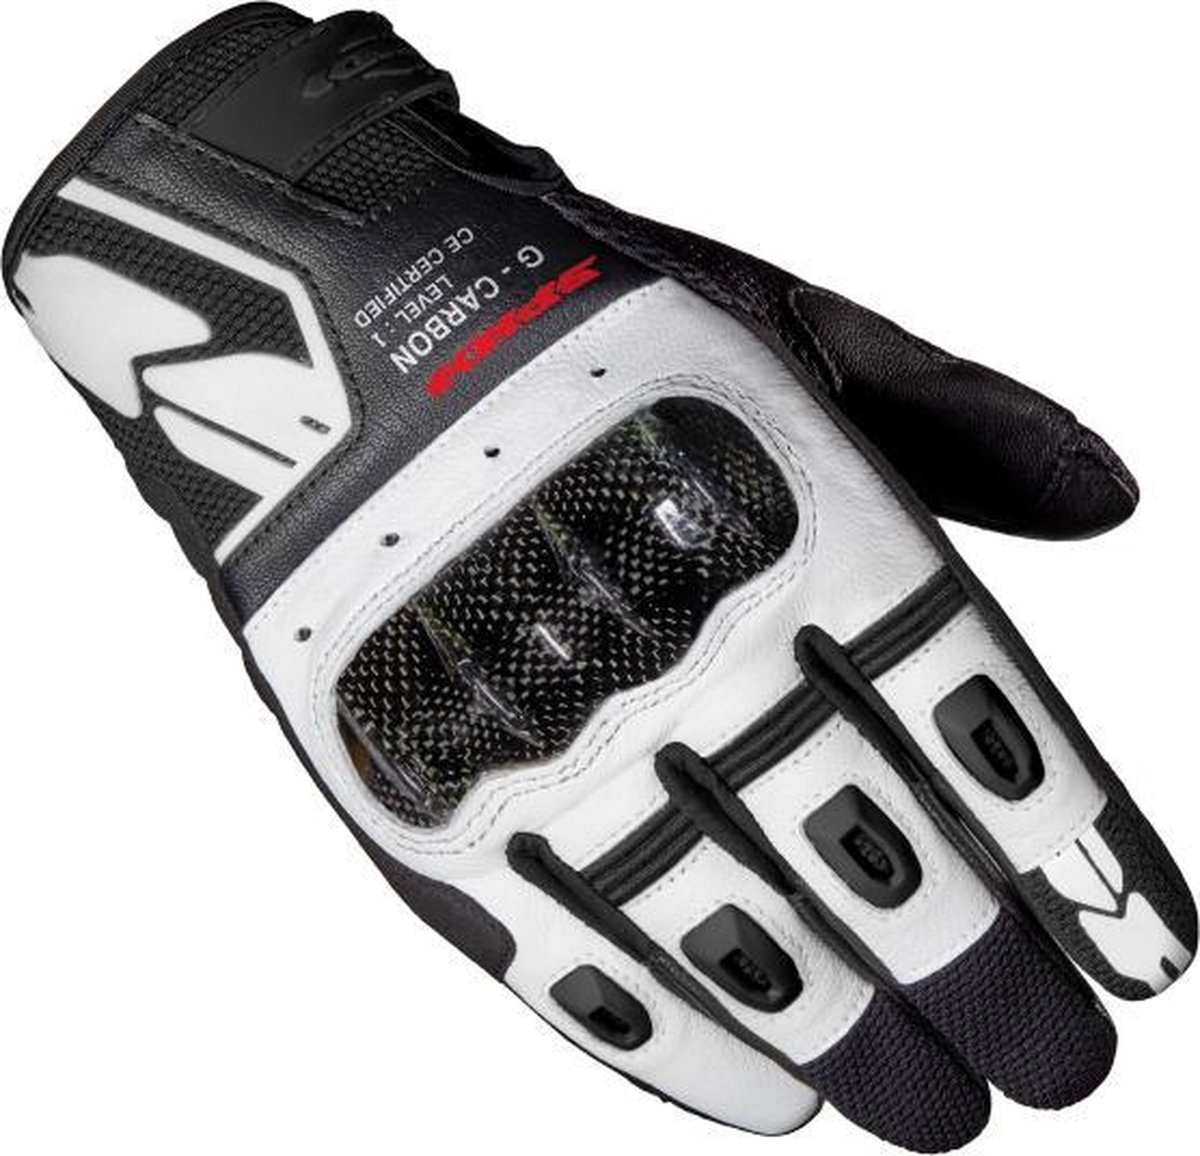 Spidi G-Carbon White Motorcycle Gloves S